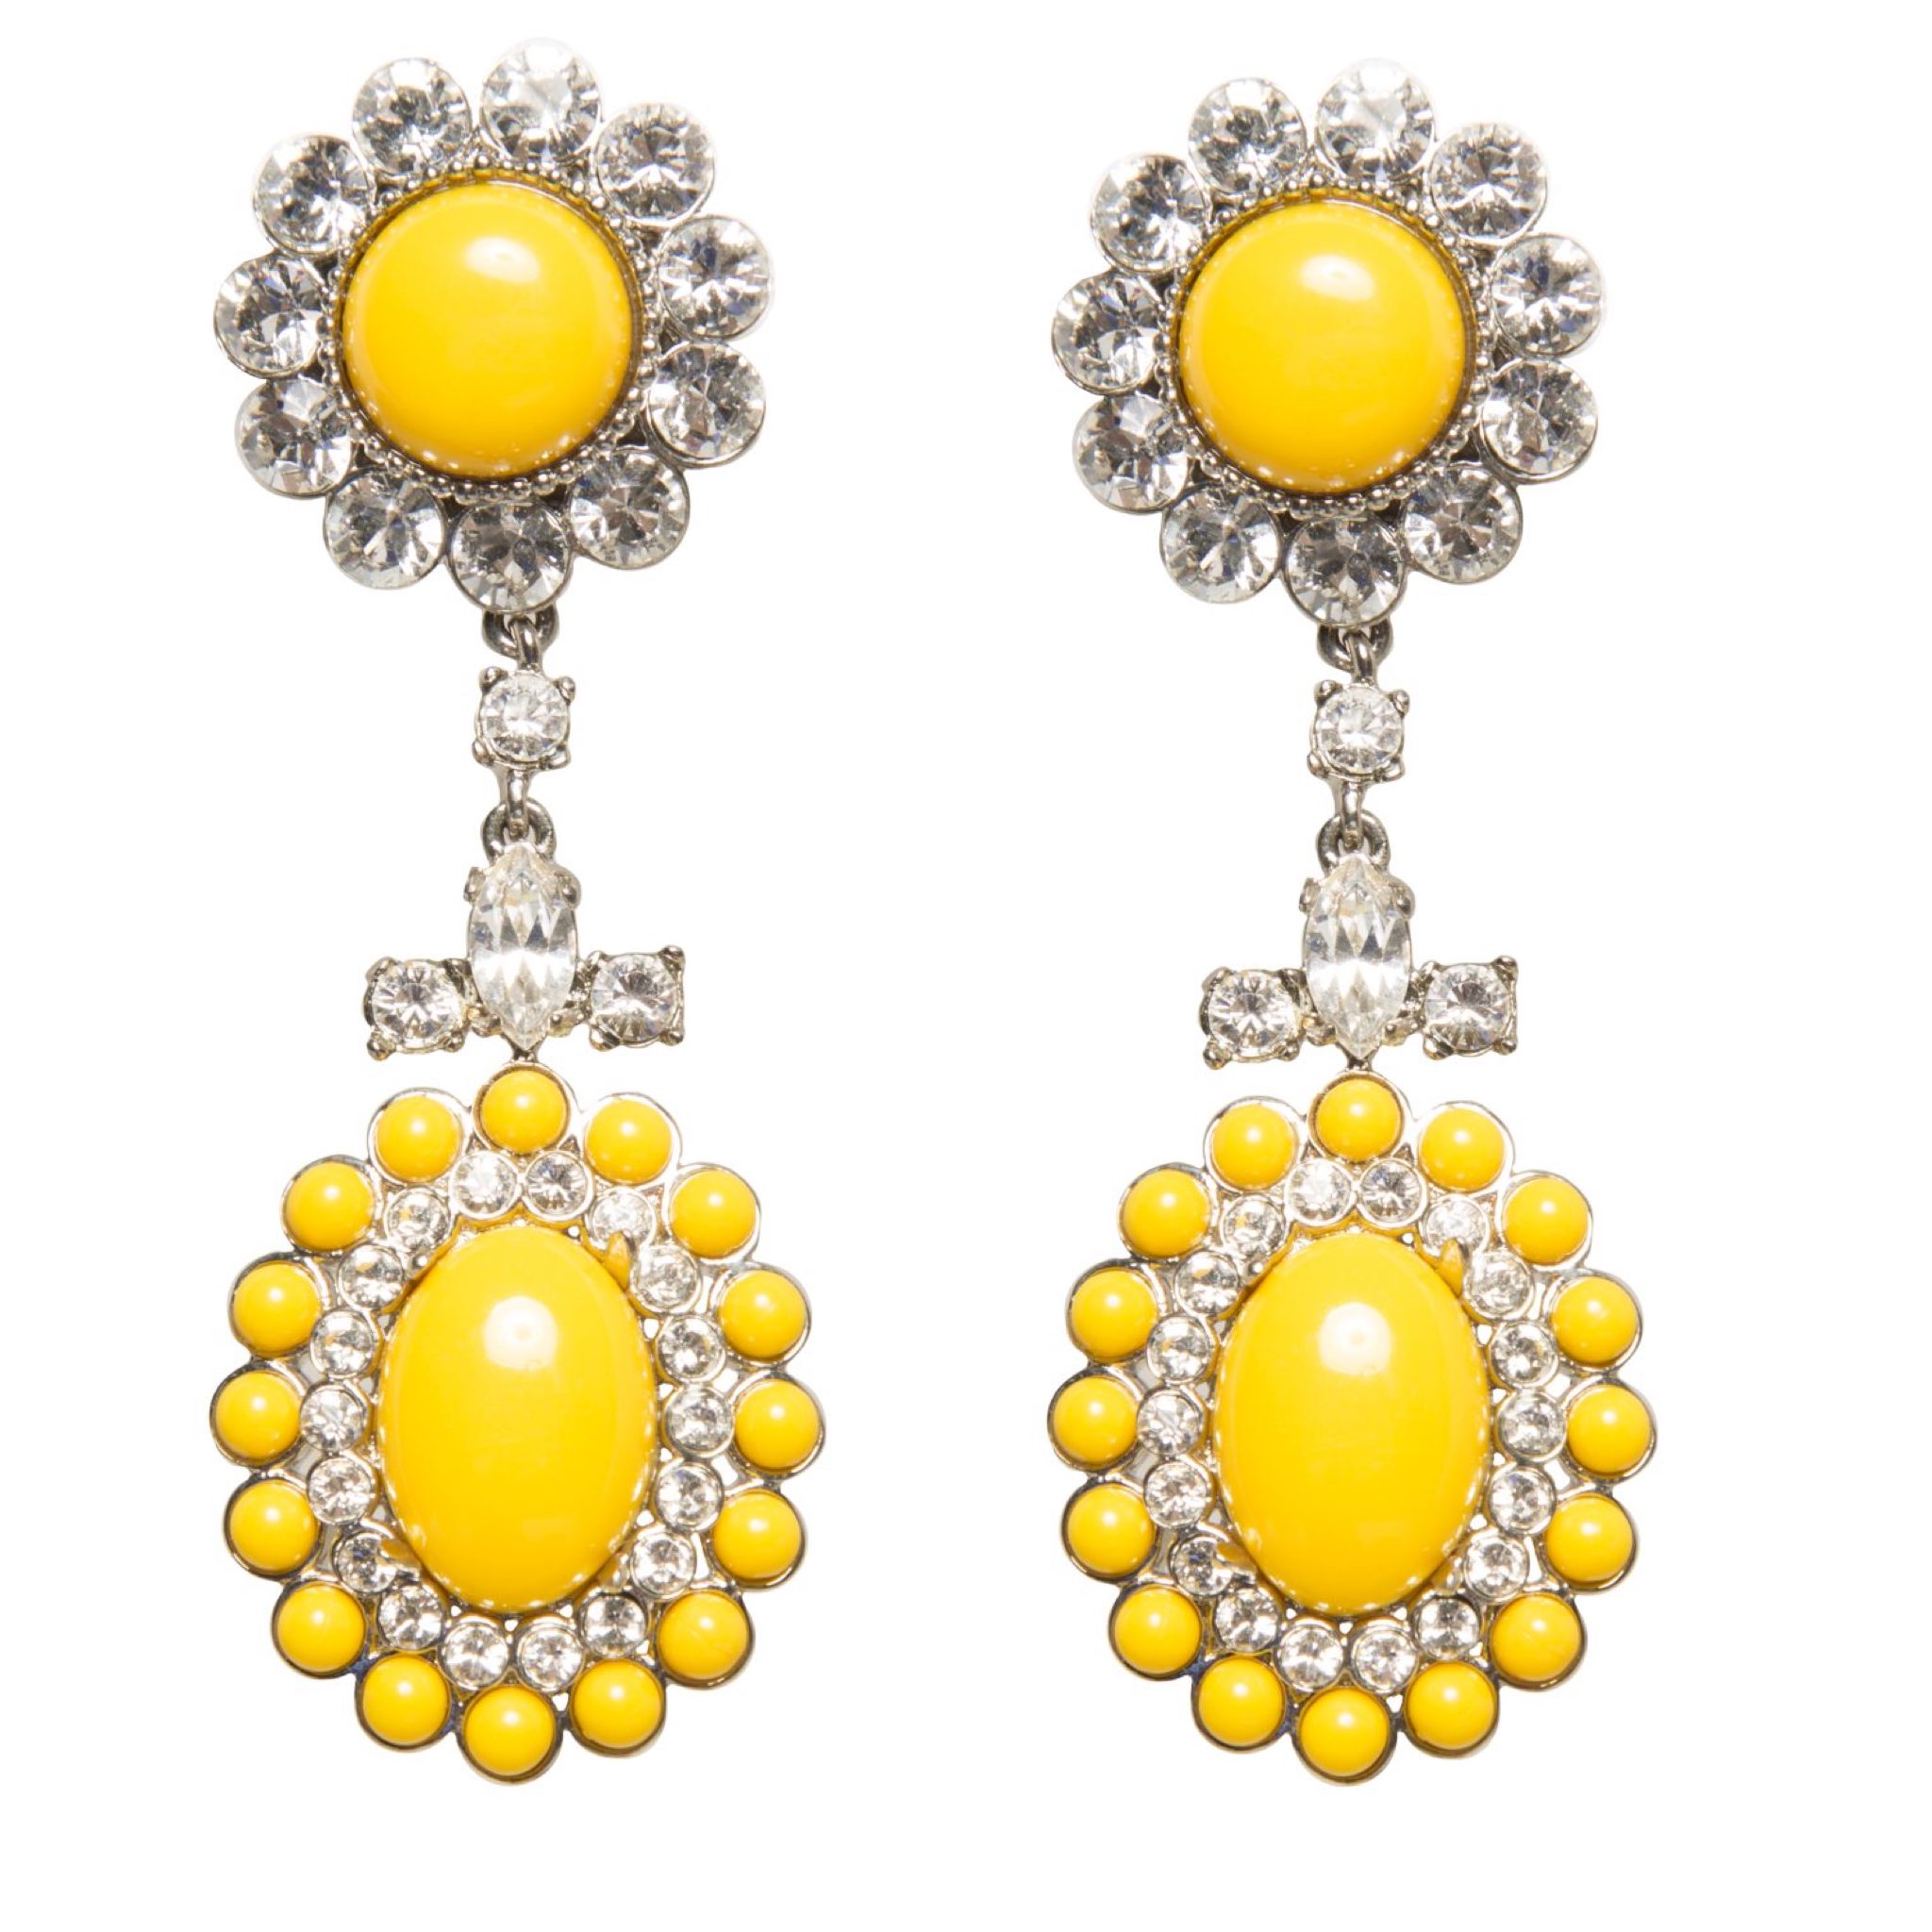 Yellow stone dangle earrings